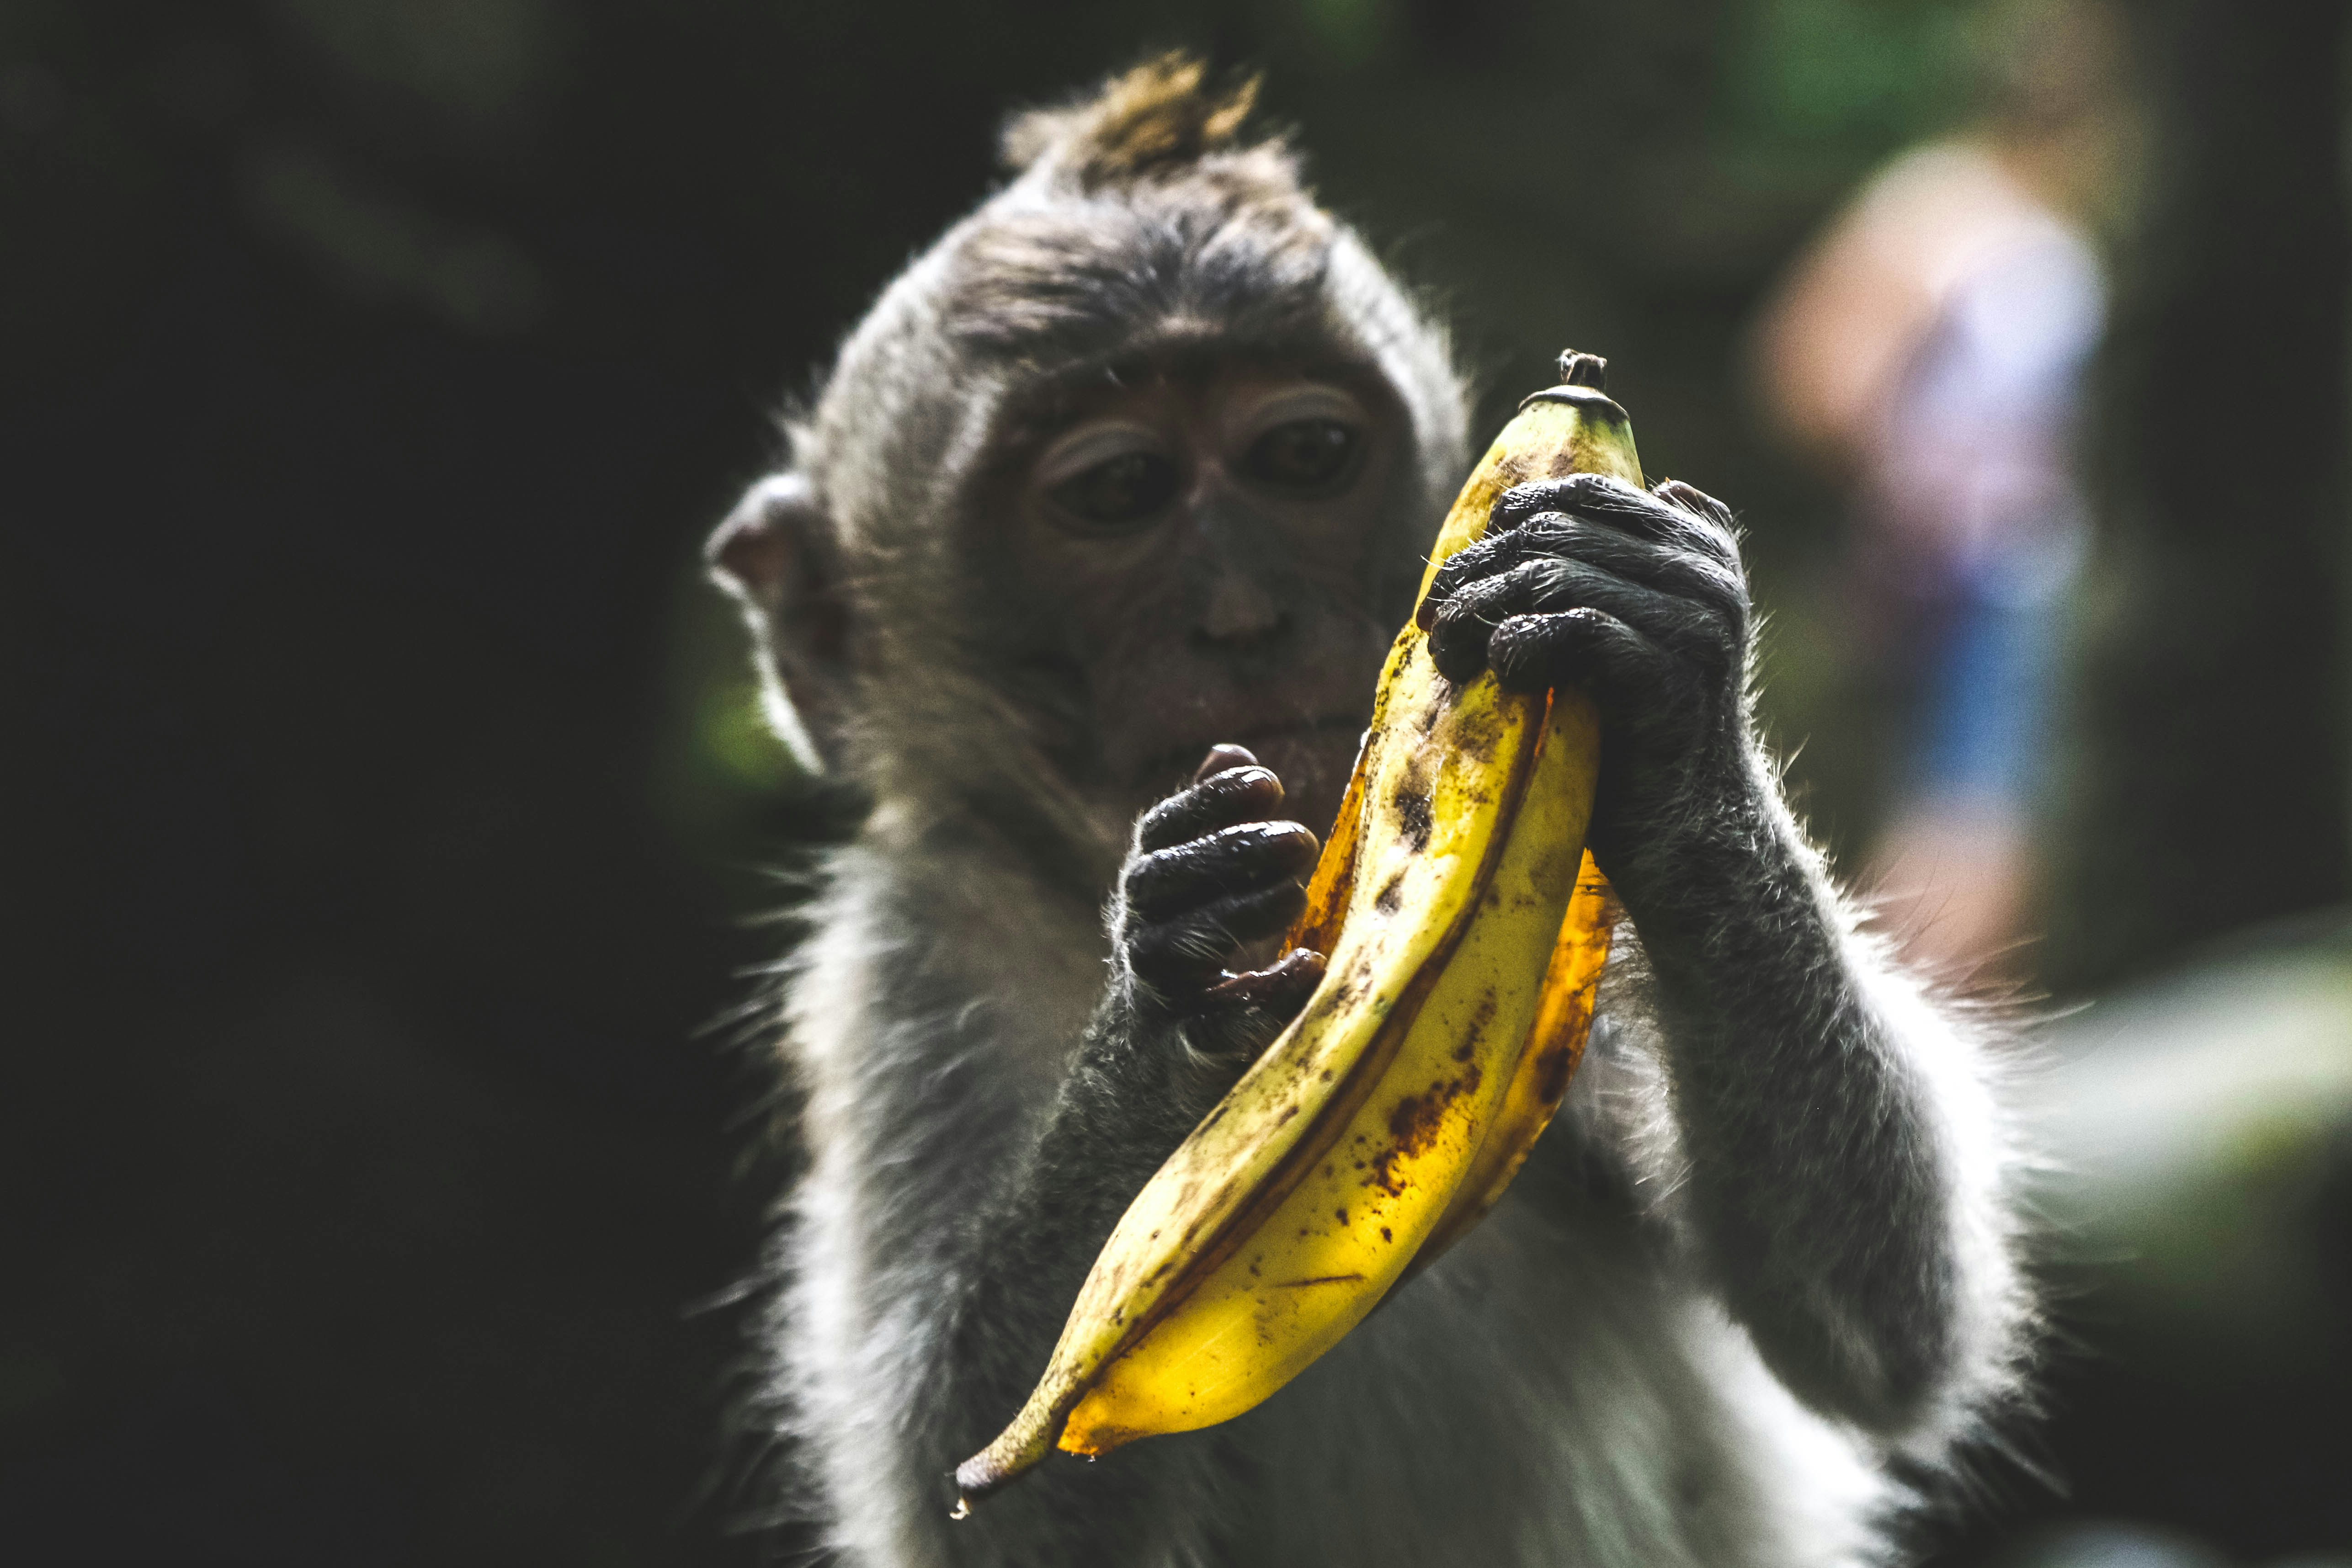 monkey holding banana peel during daytime